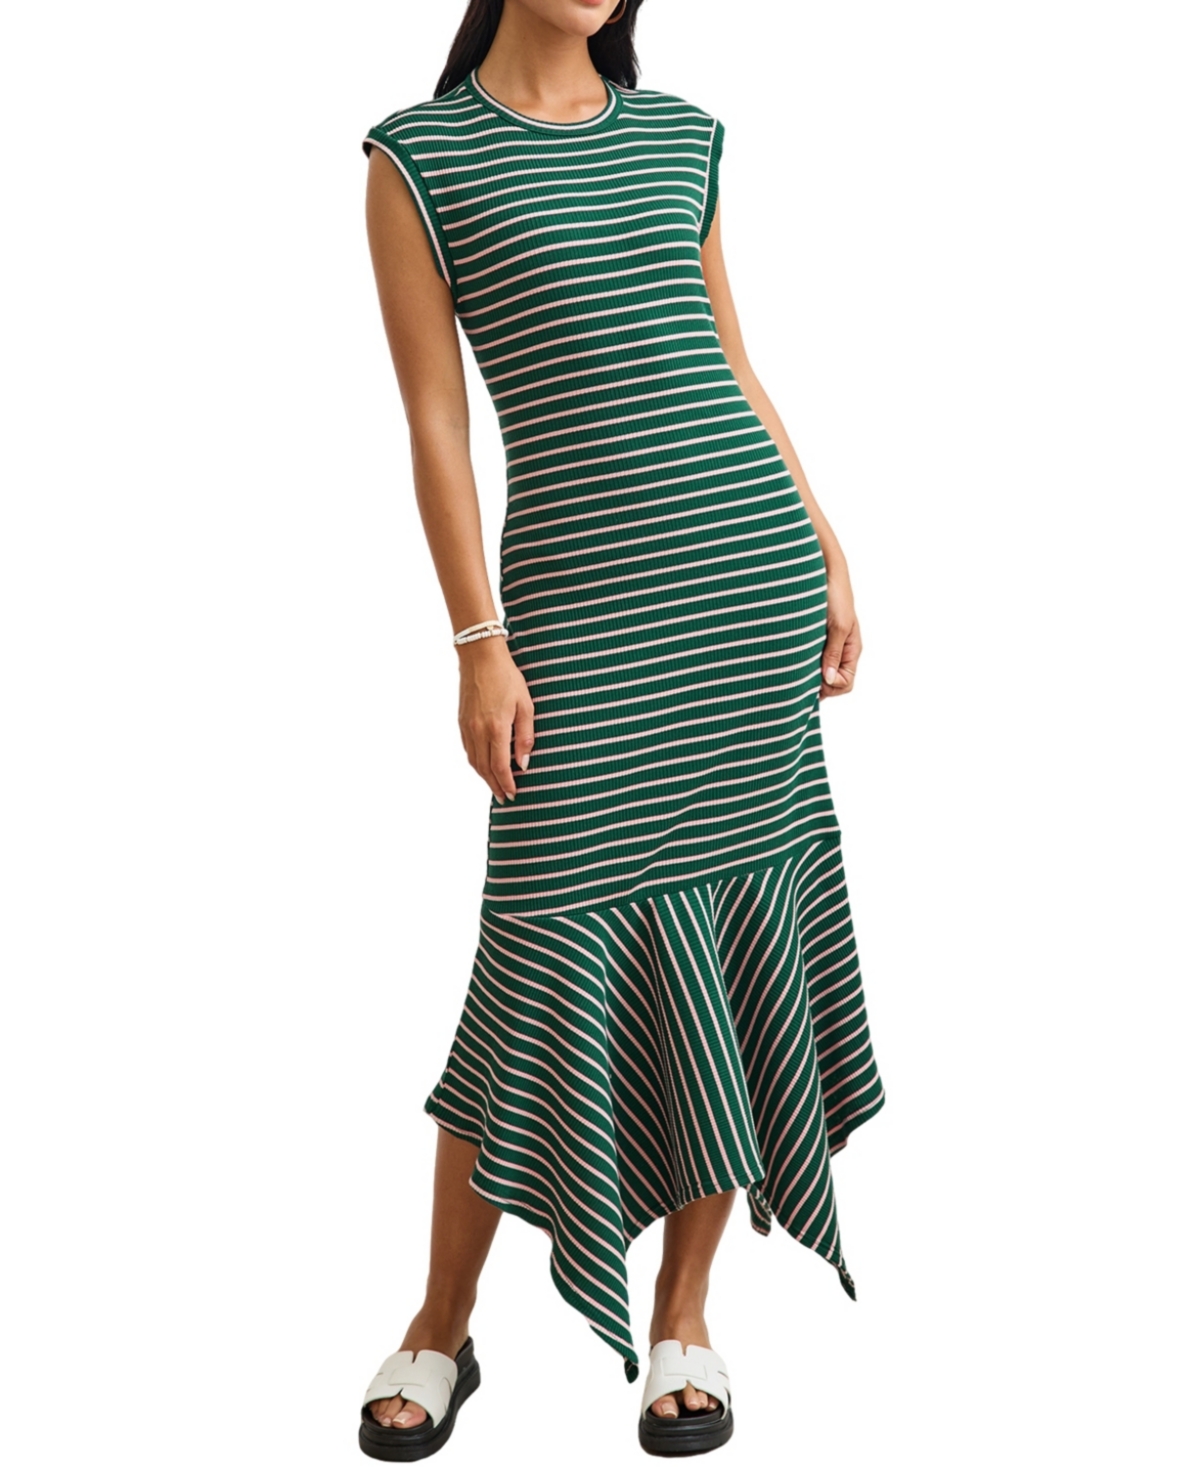 Women's Striped Ribbed Flowy Maxi Beach Dress - Dark green